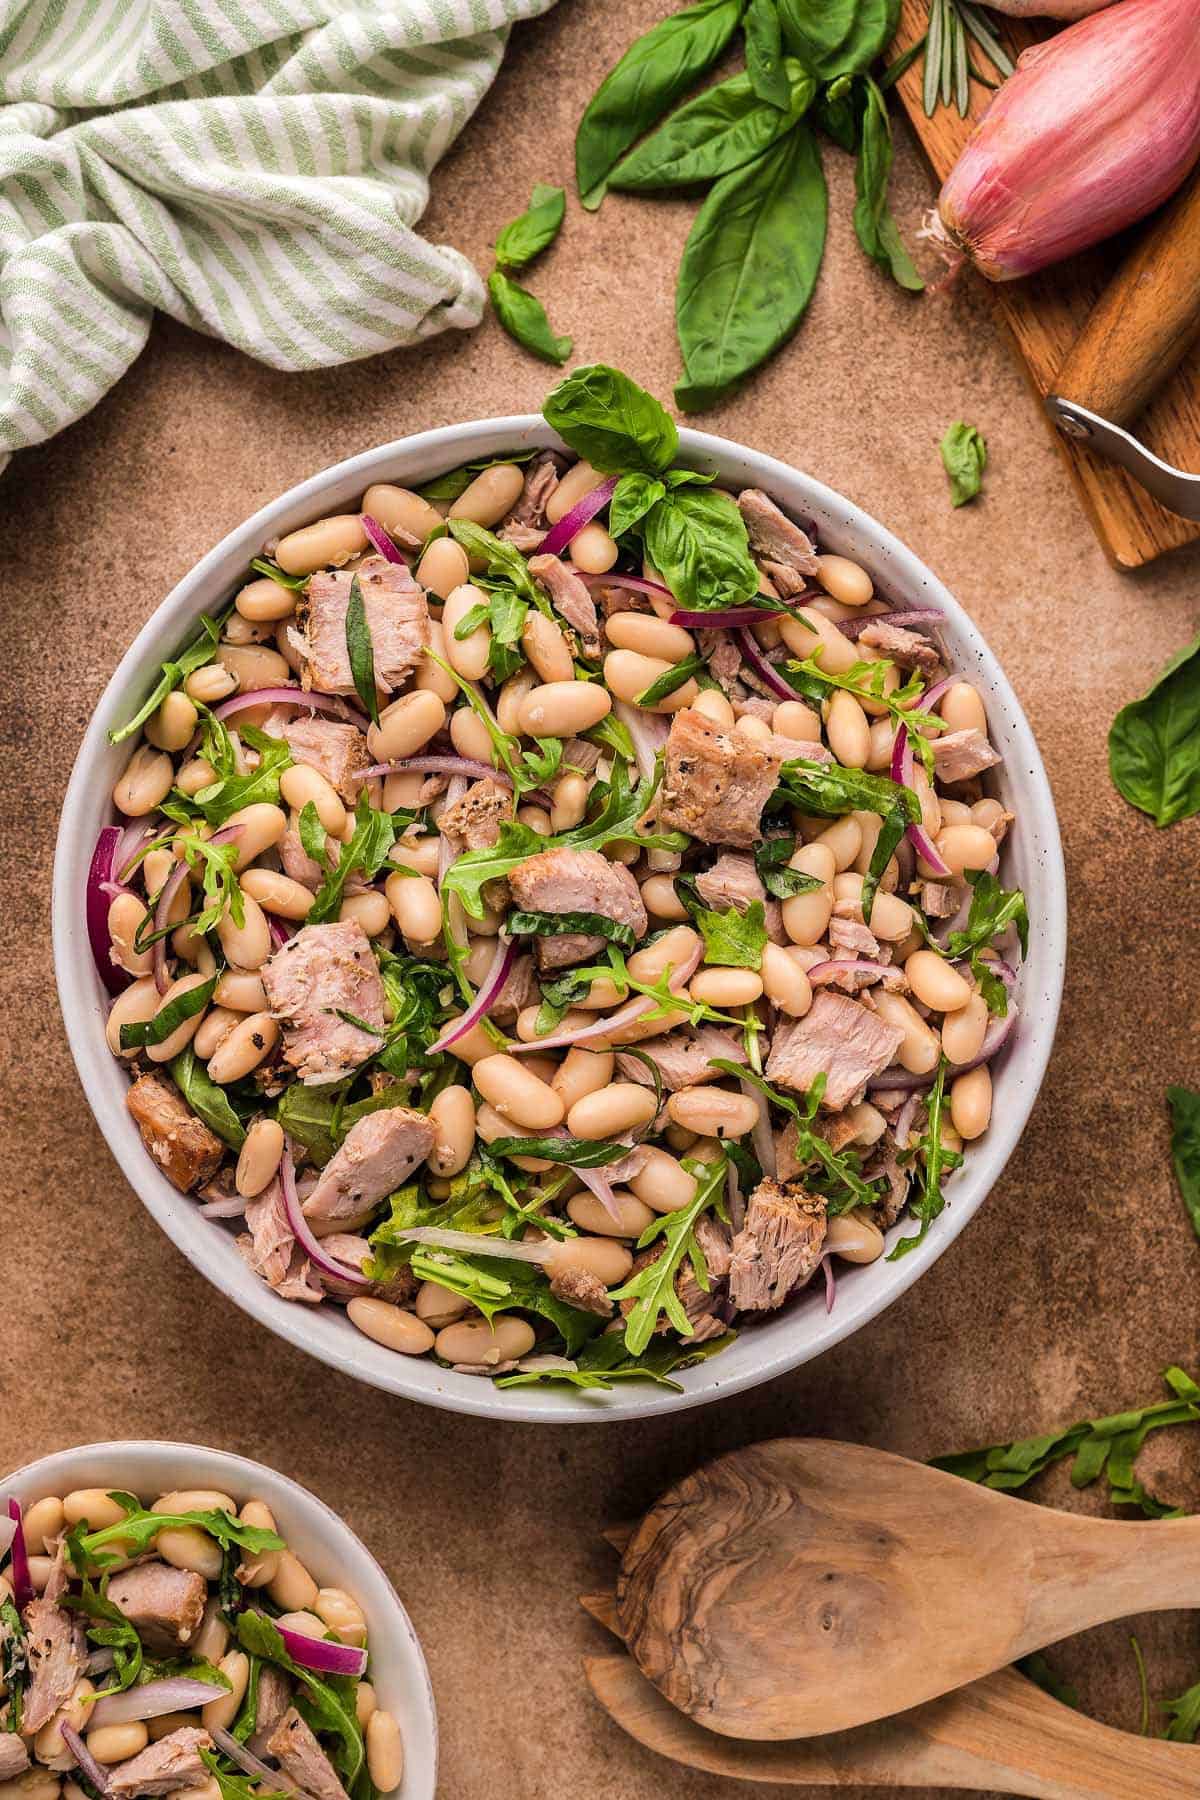 12. Italian Tuna White Bean Salad